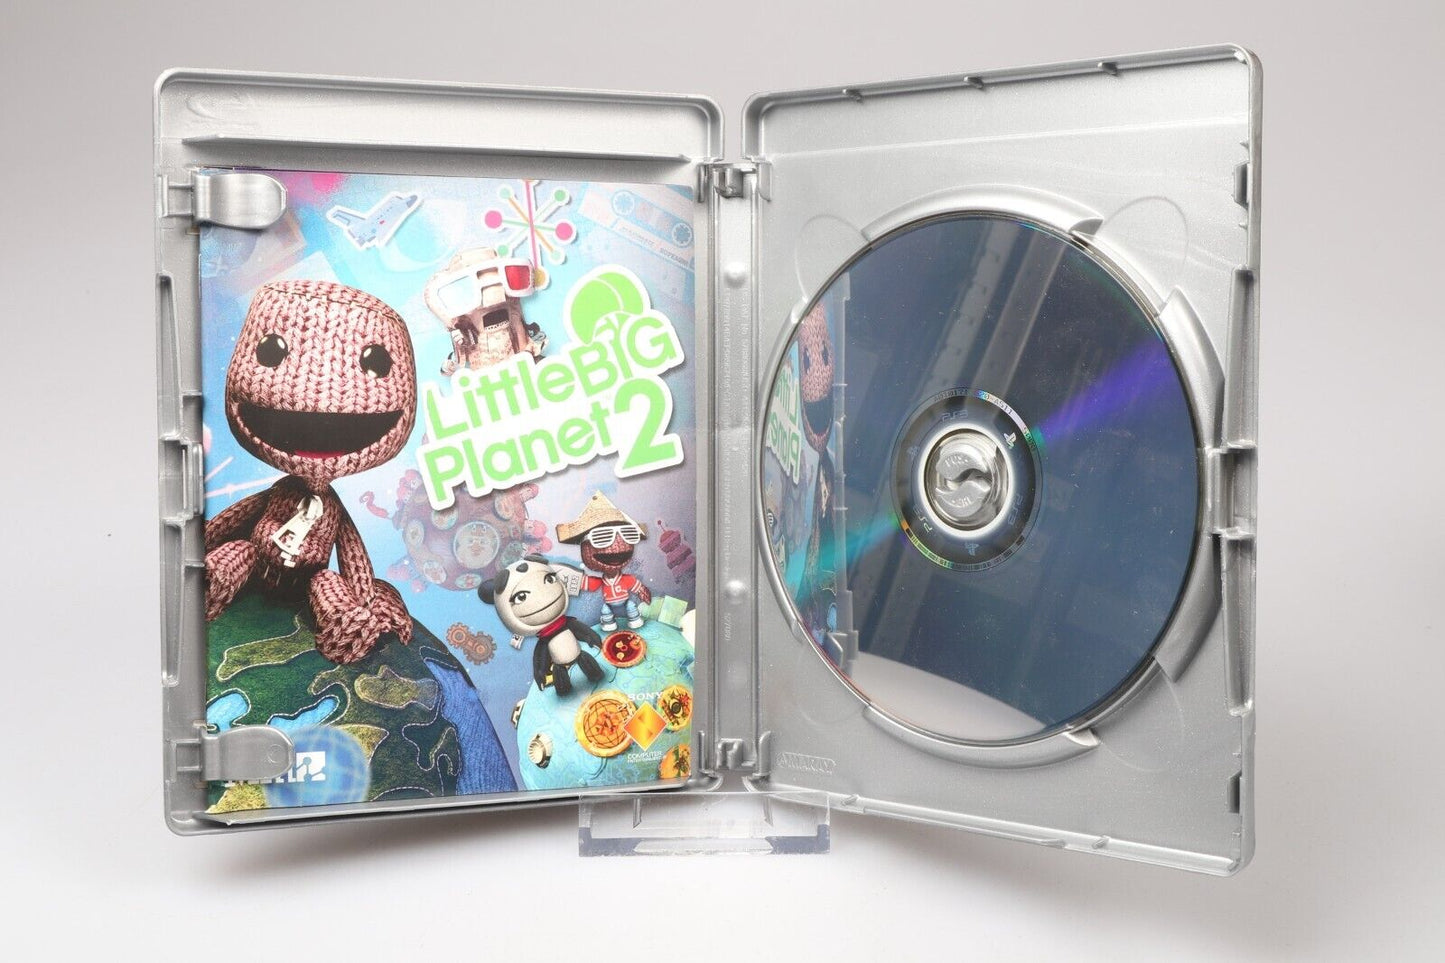 PS3 | LittleBigPlanet 2 PL (PAL)